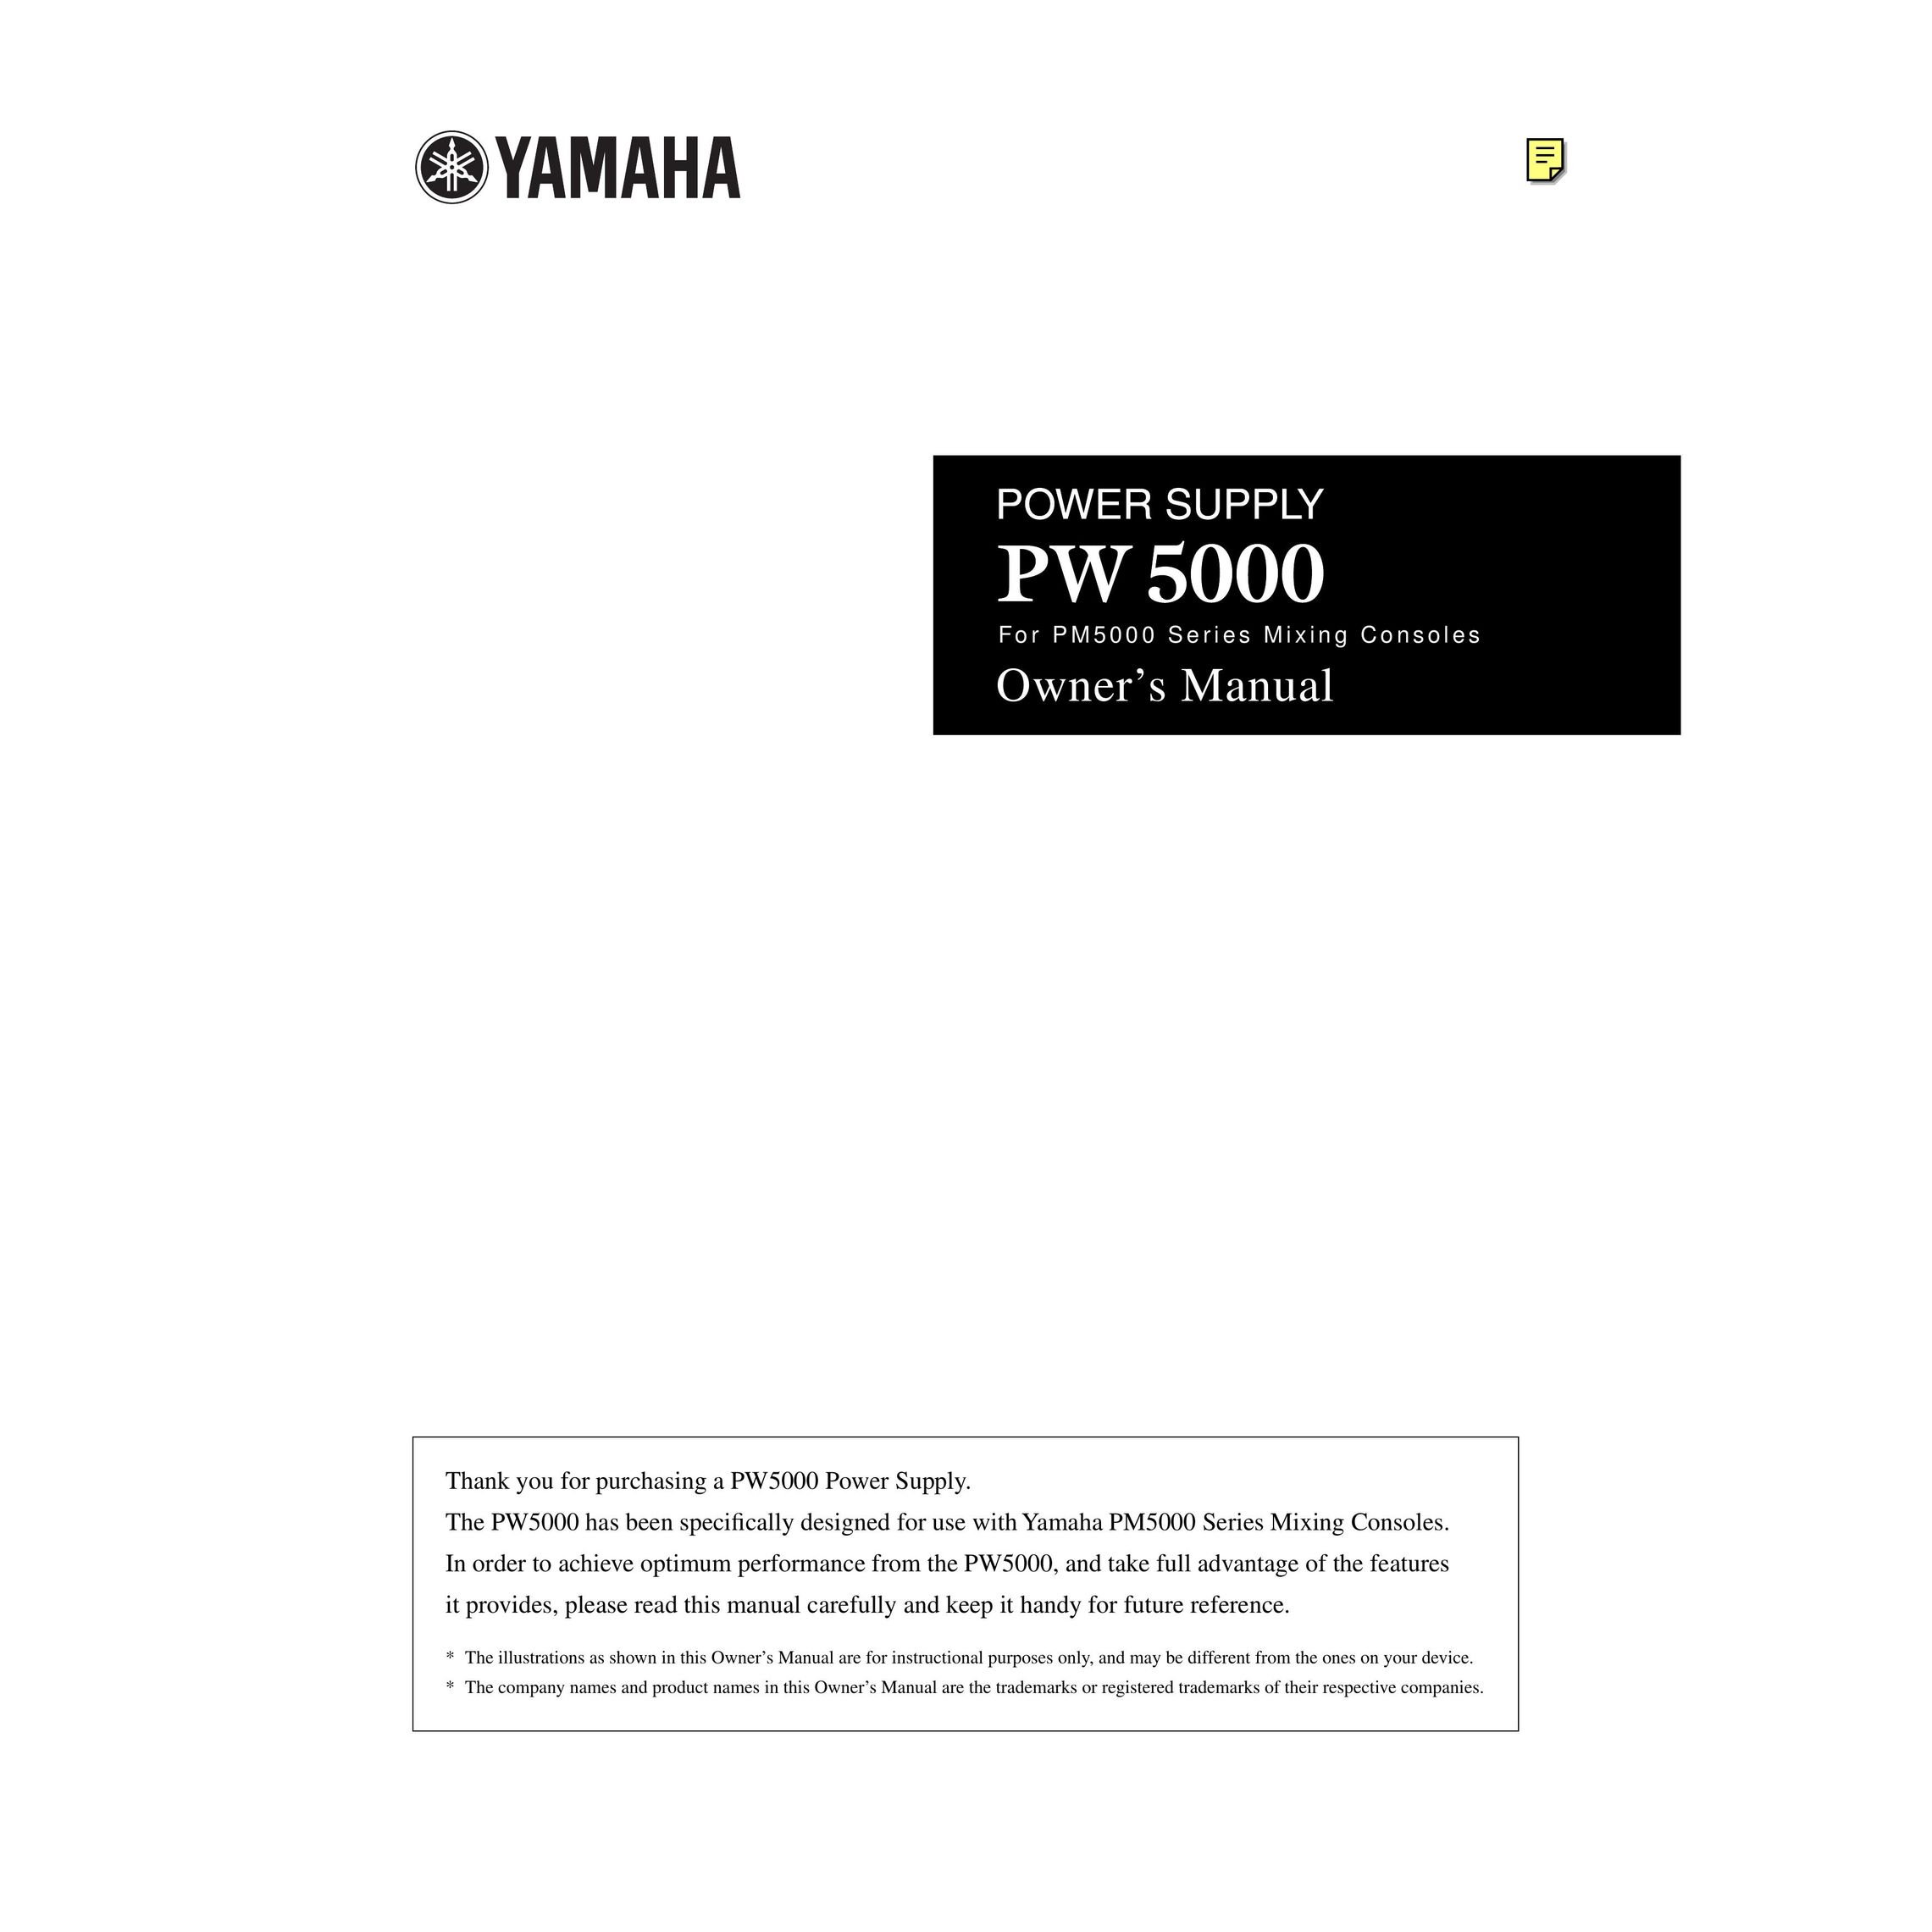 Yamaha PW5000 Power Supply User Manual